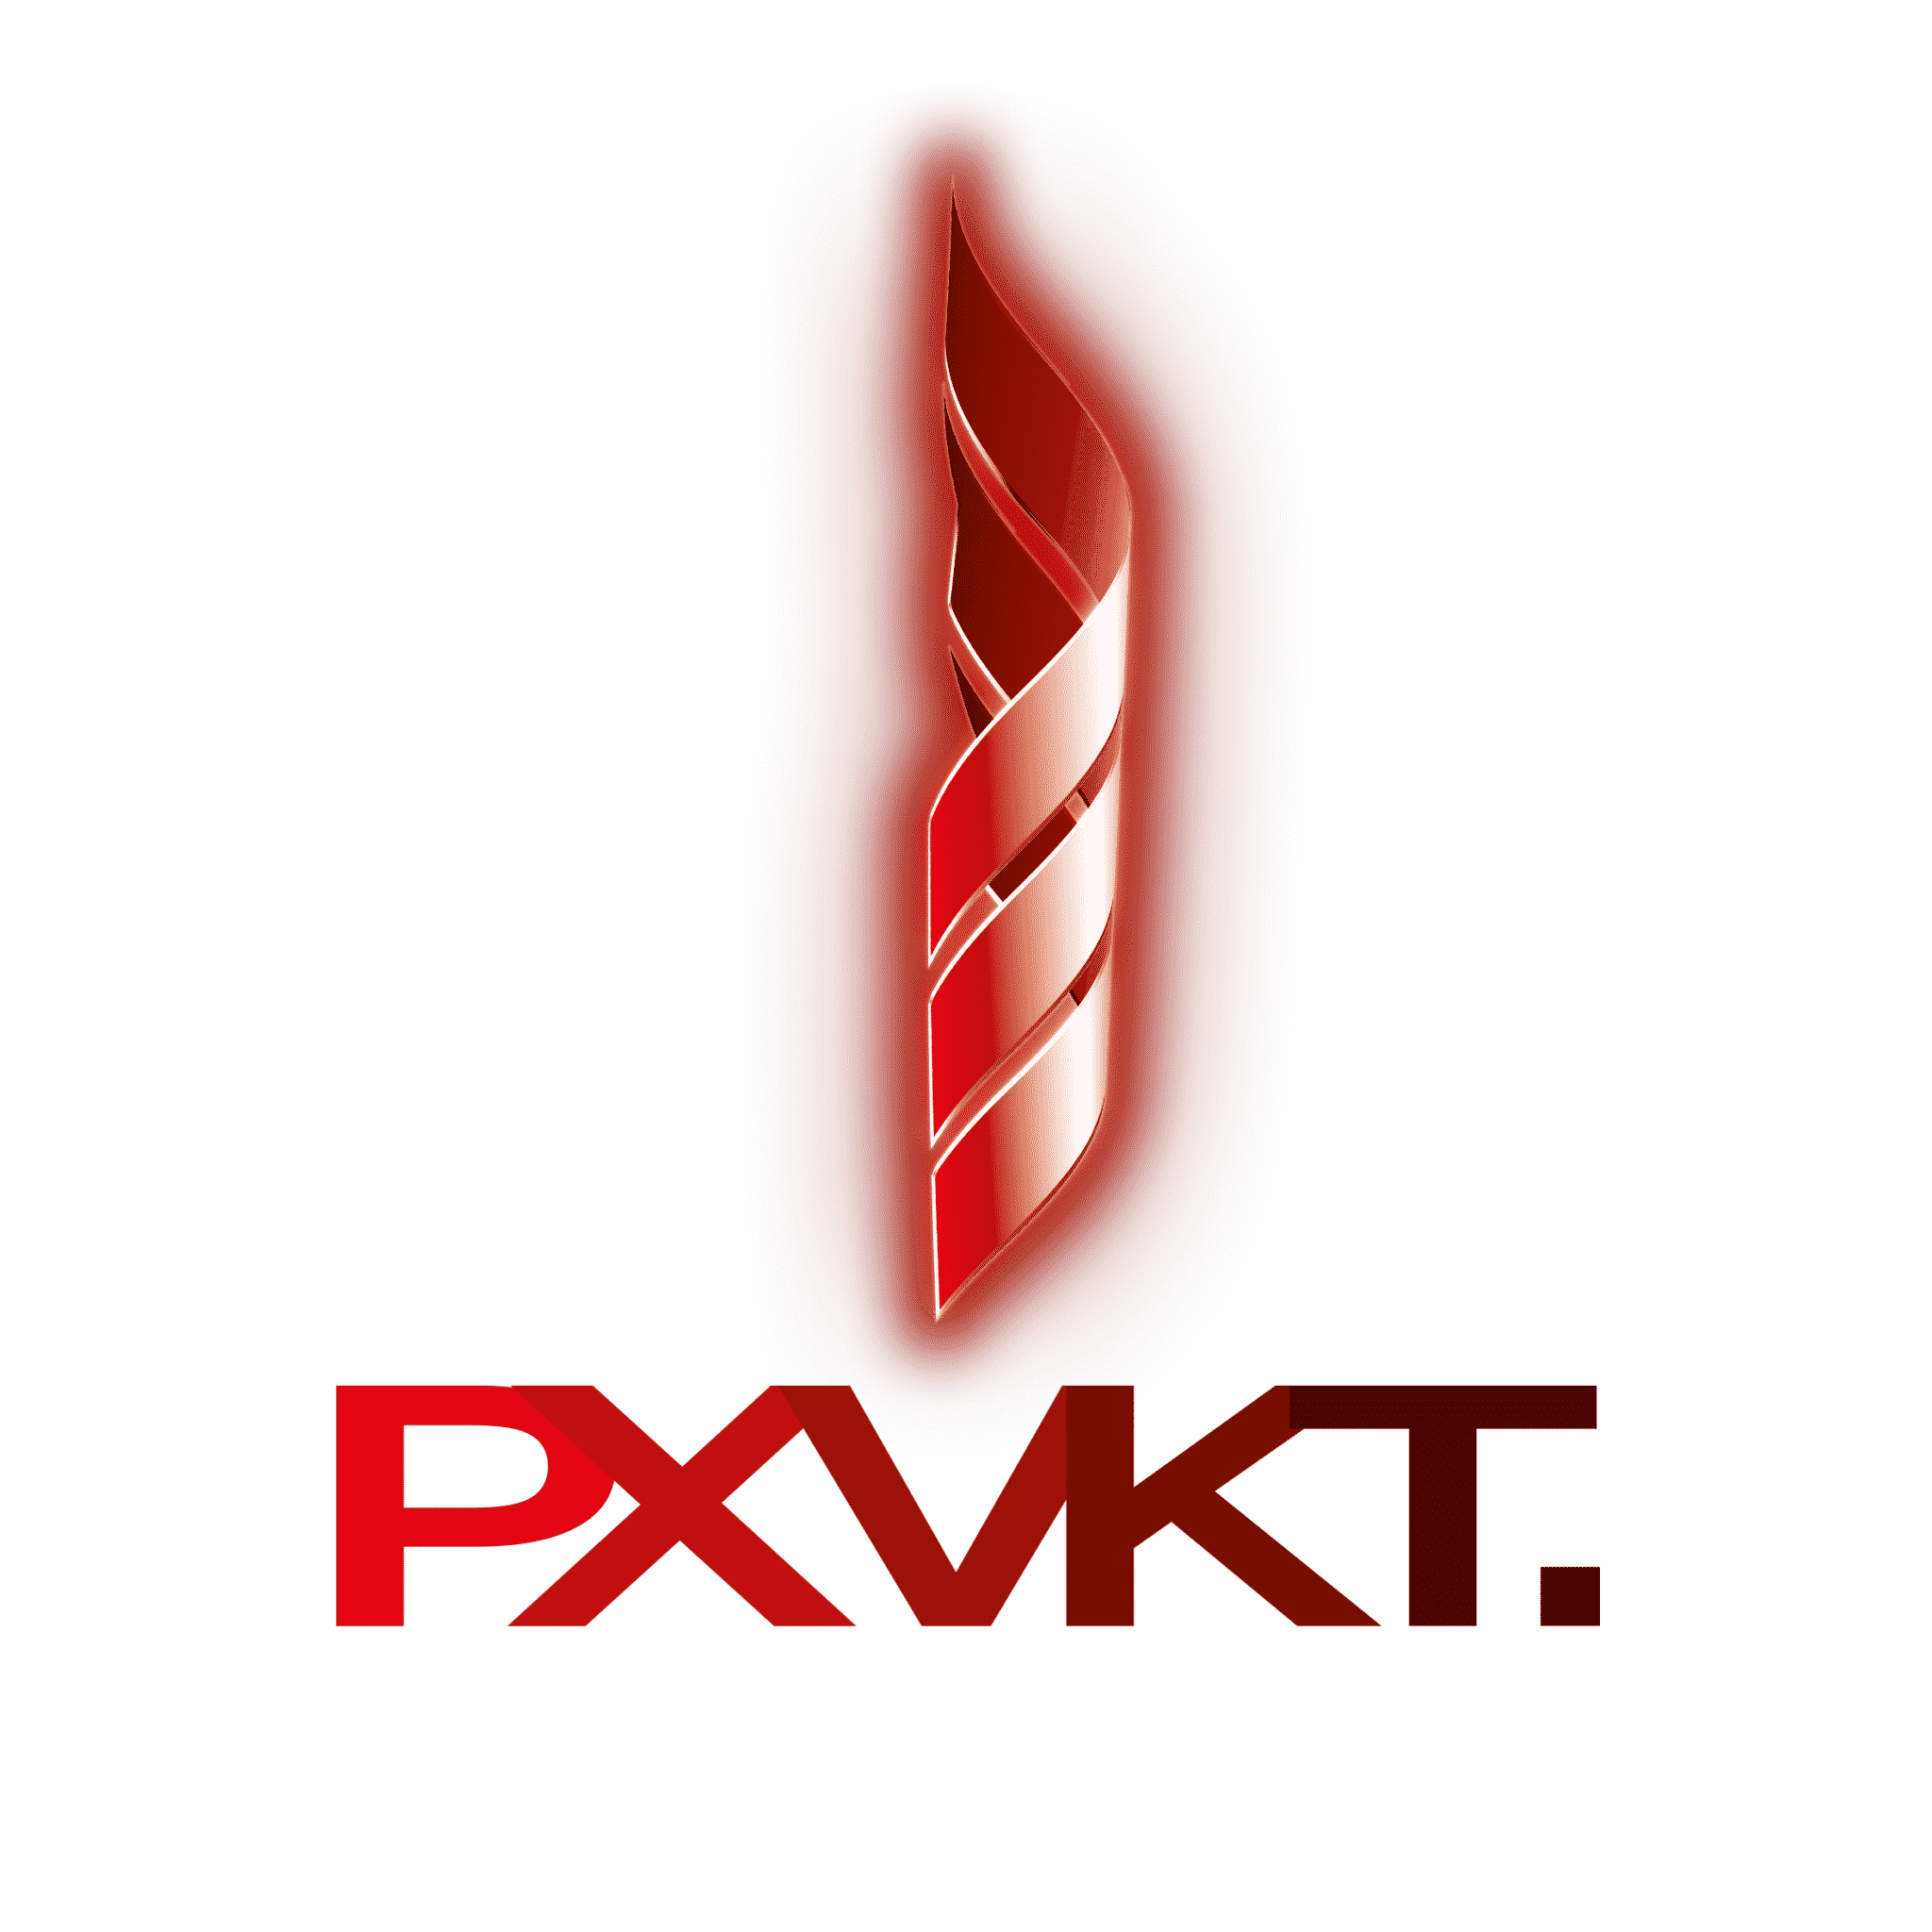 Logo PXVKT, Glowing Logo, glühendes Logo